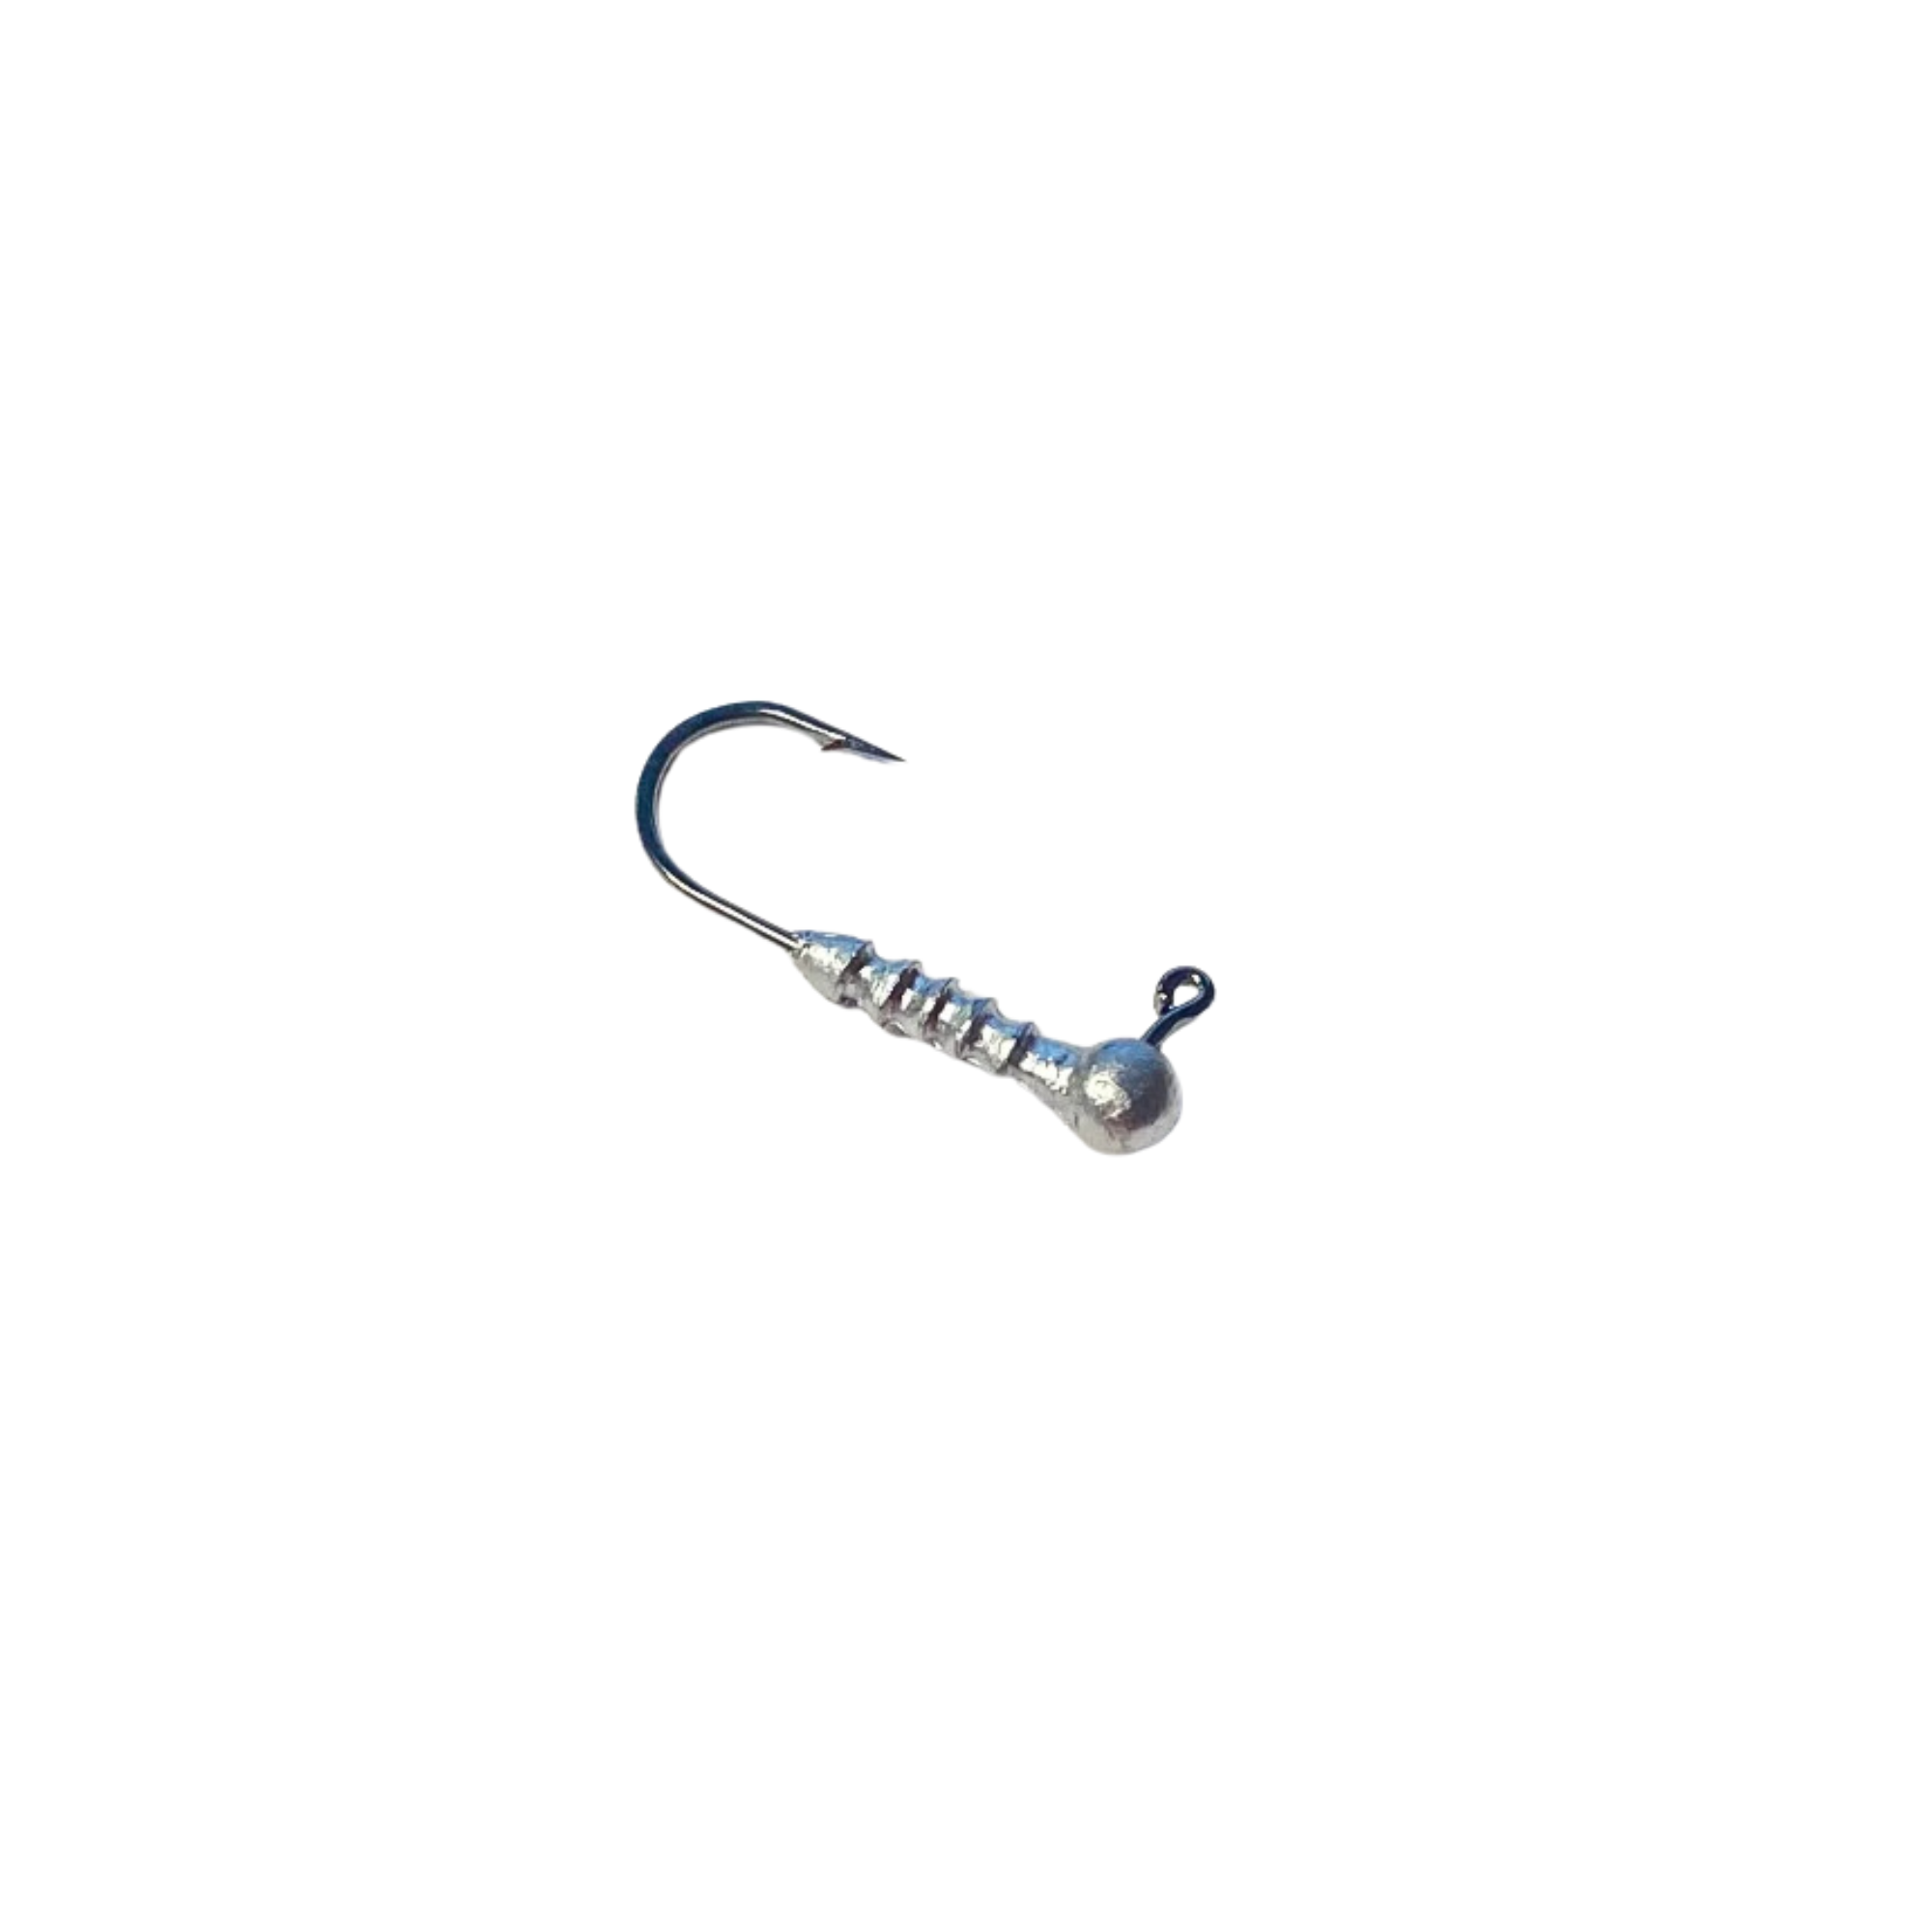 Micro Deathgrip Jighead, Fishing Hooks, Tackle, Store